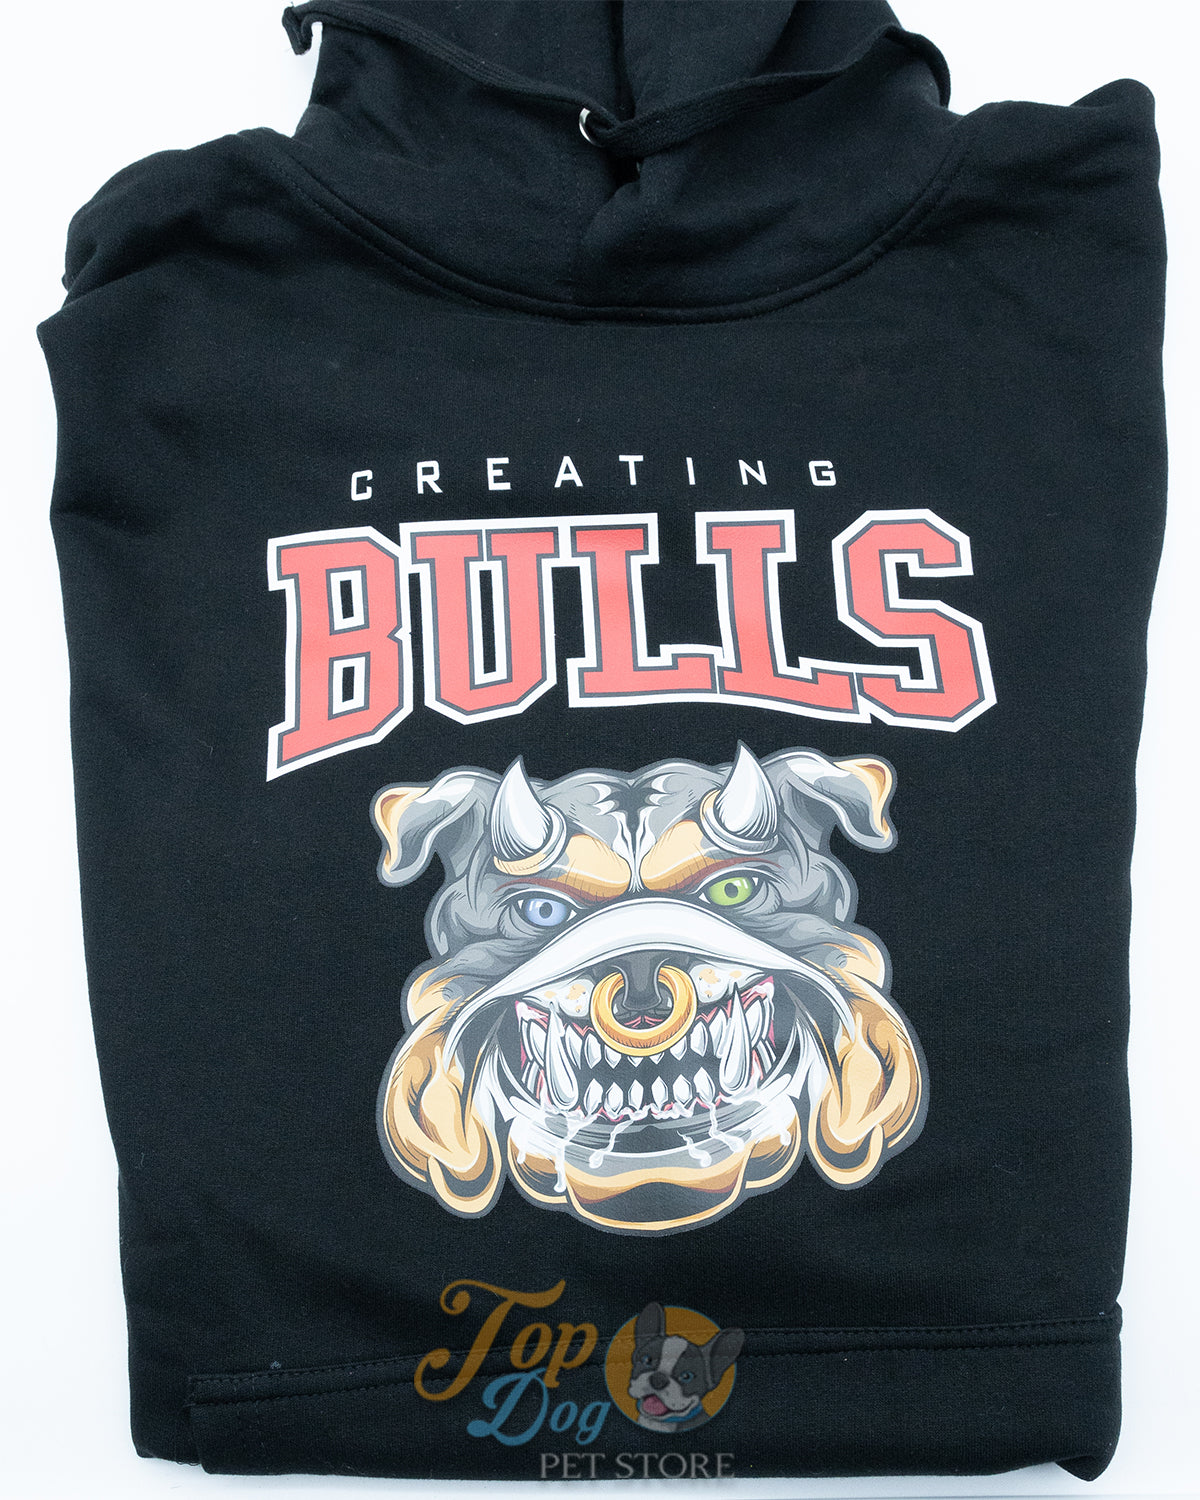 Bulldog Cartel "Creating Bulls" Hoodie